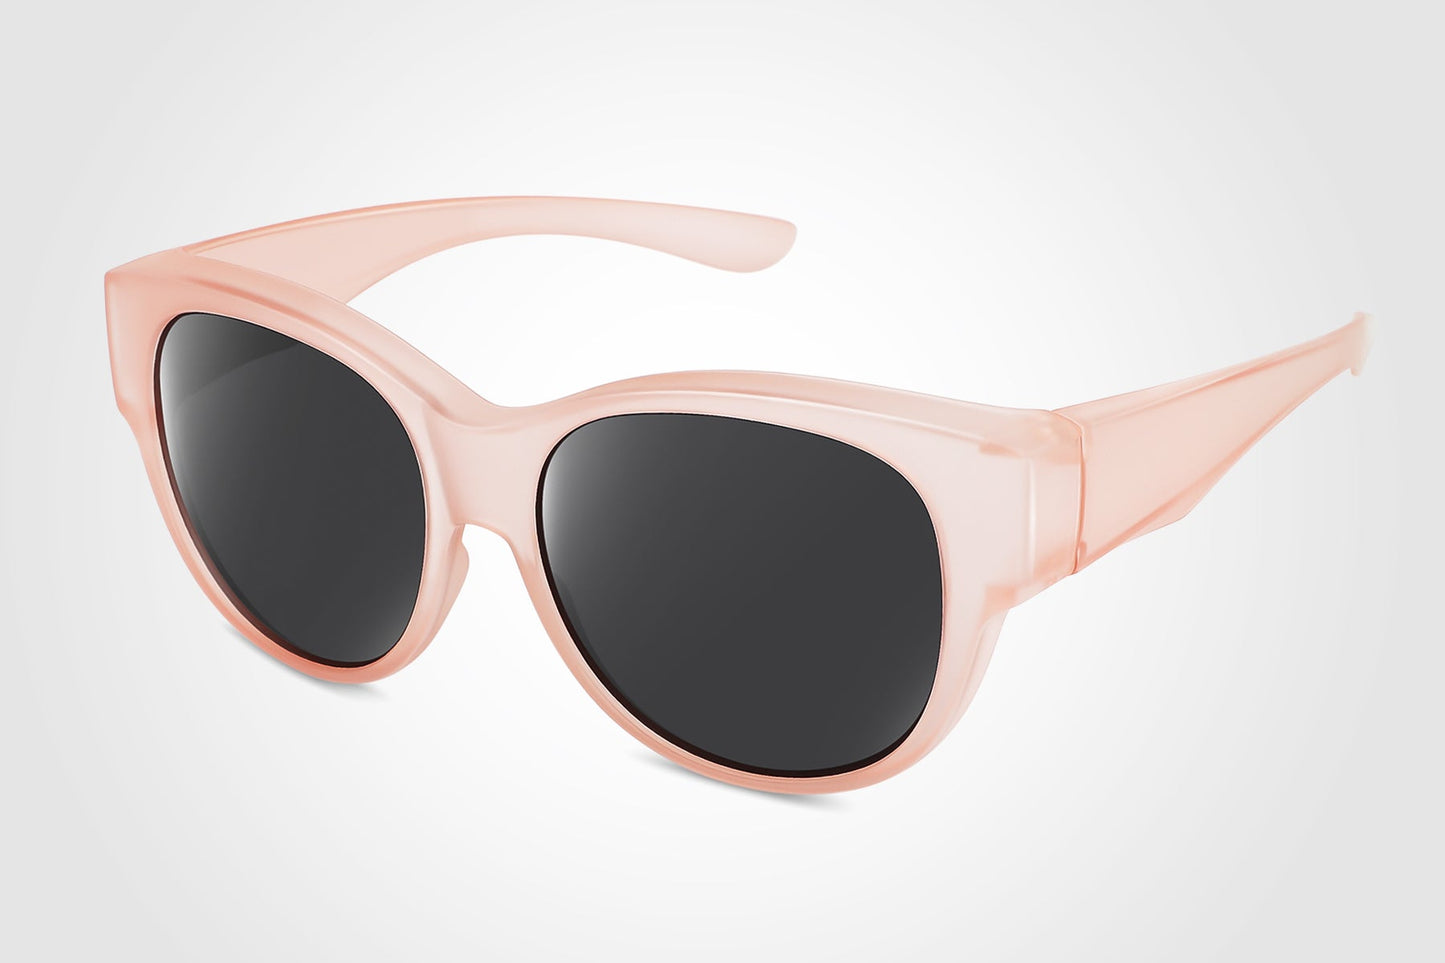 Medium/Large Black Rectangle Fits-Over Sunglasses by i-gogs at Fleet Farm